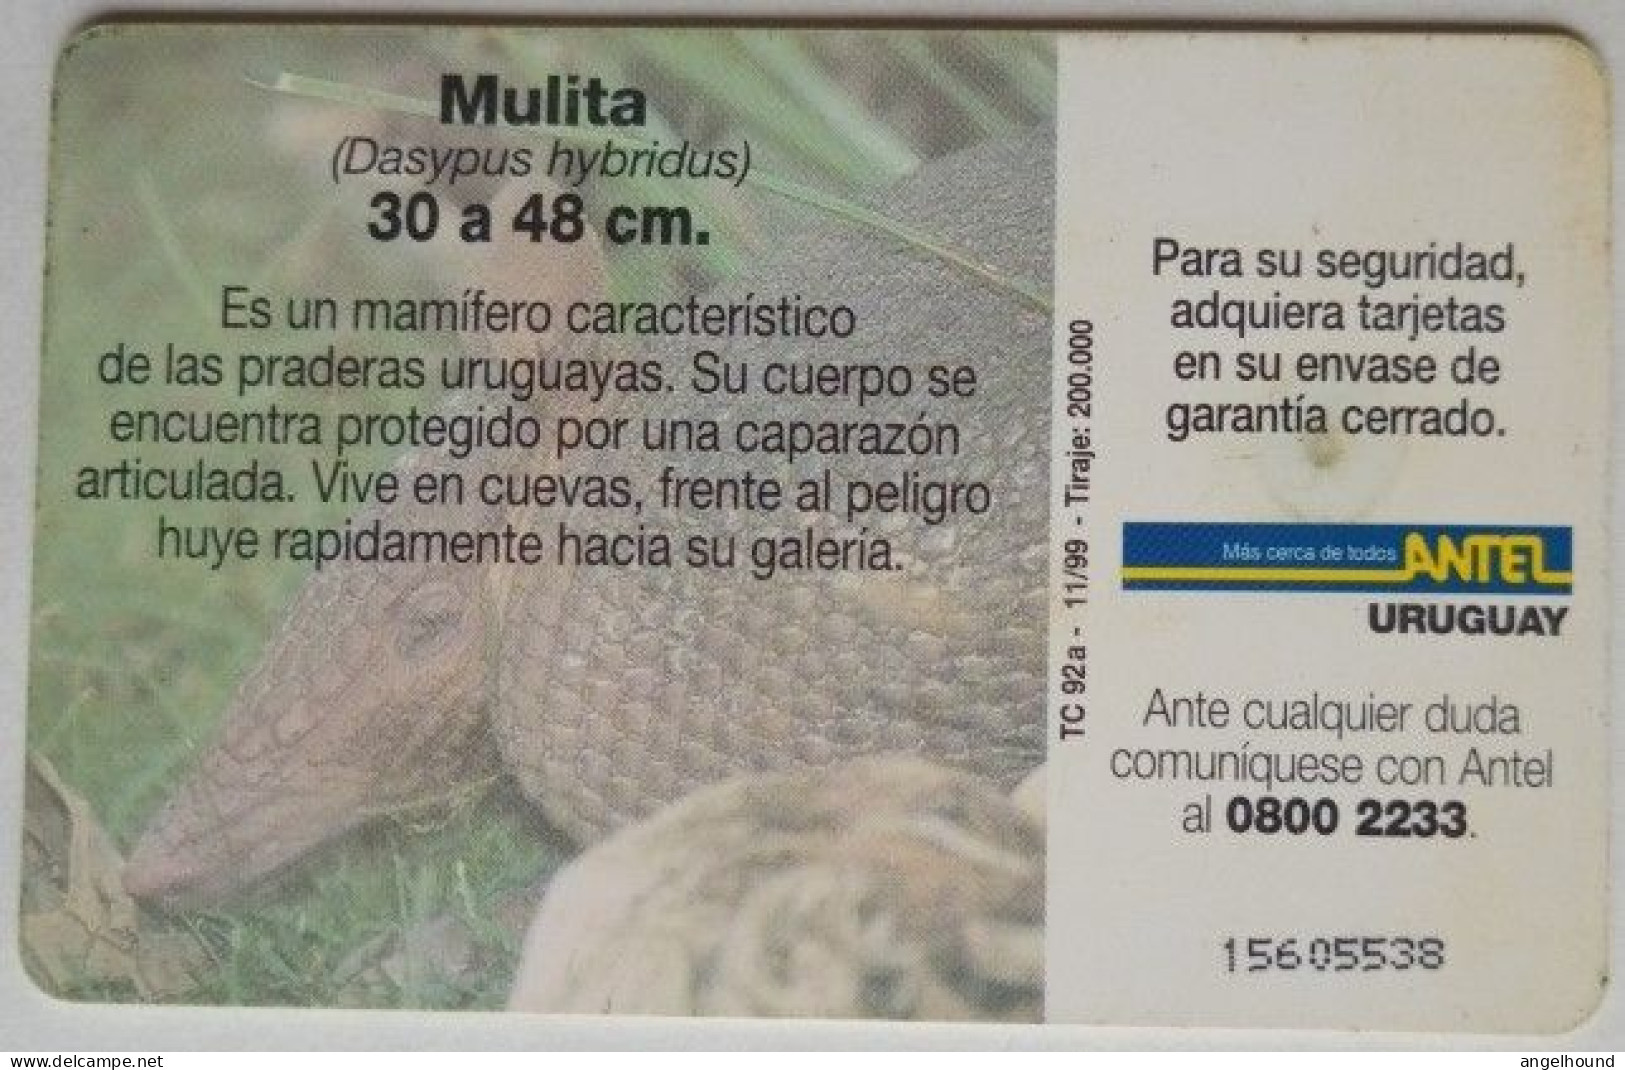 Uruguay Antel $5 Chip Card - Mulita - Uruguay